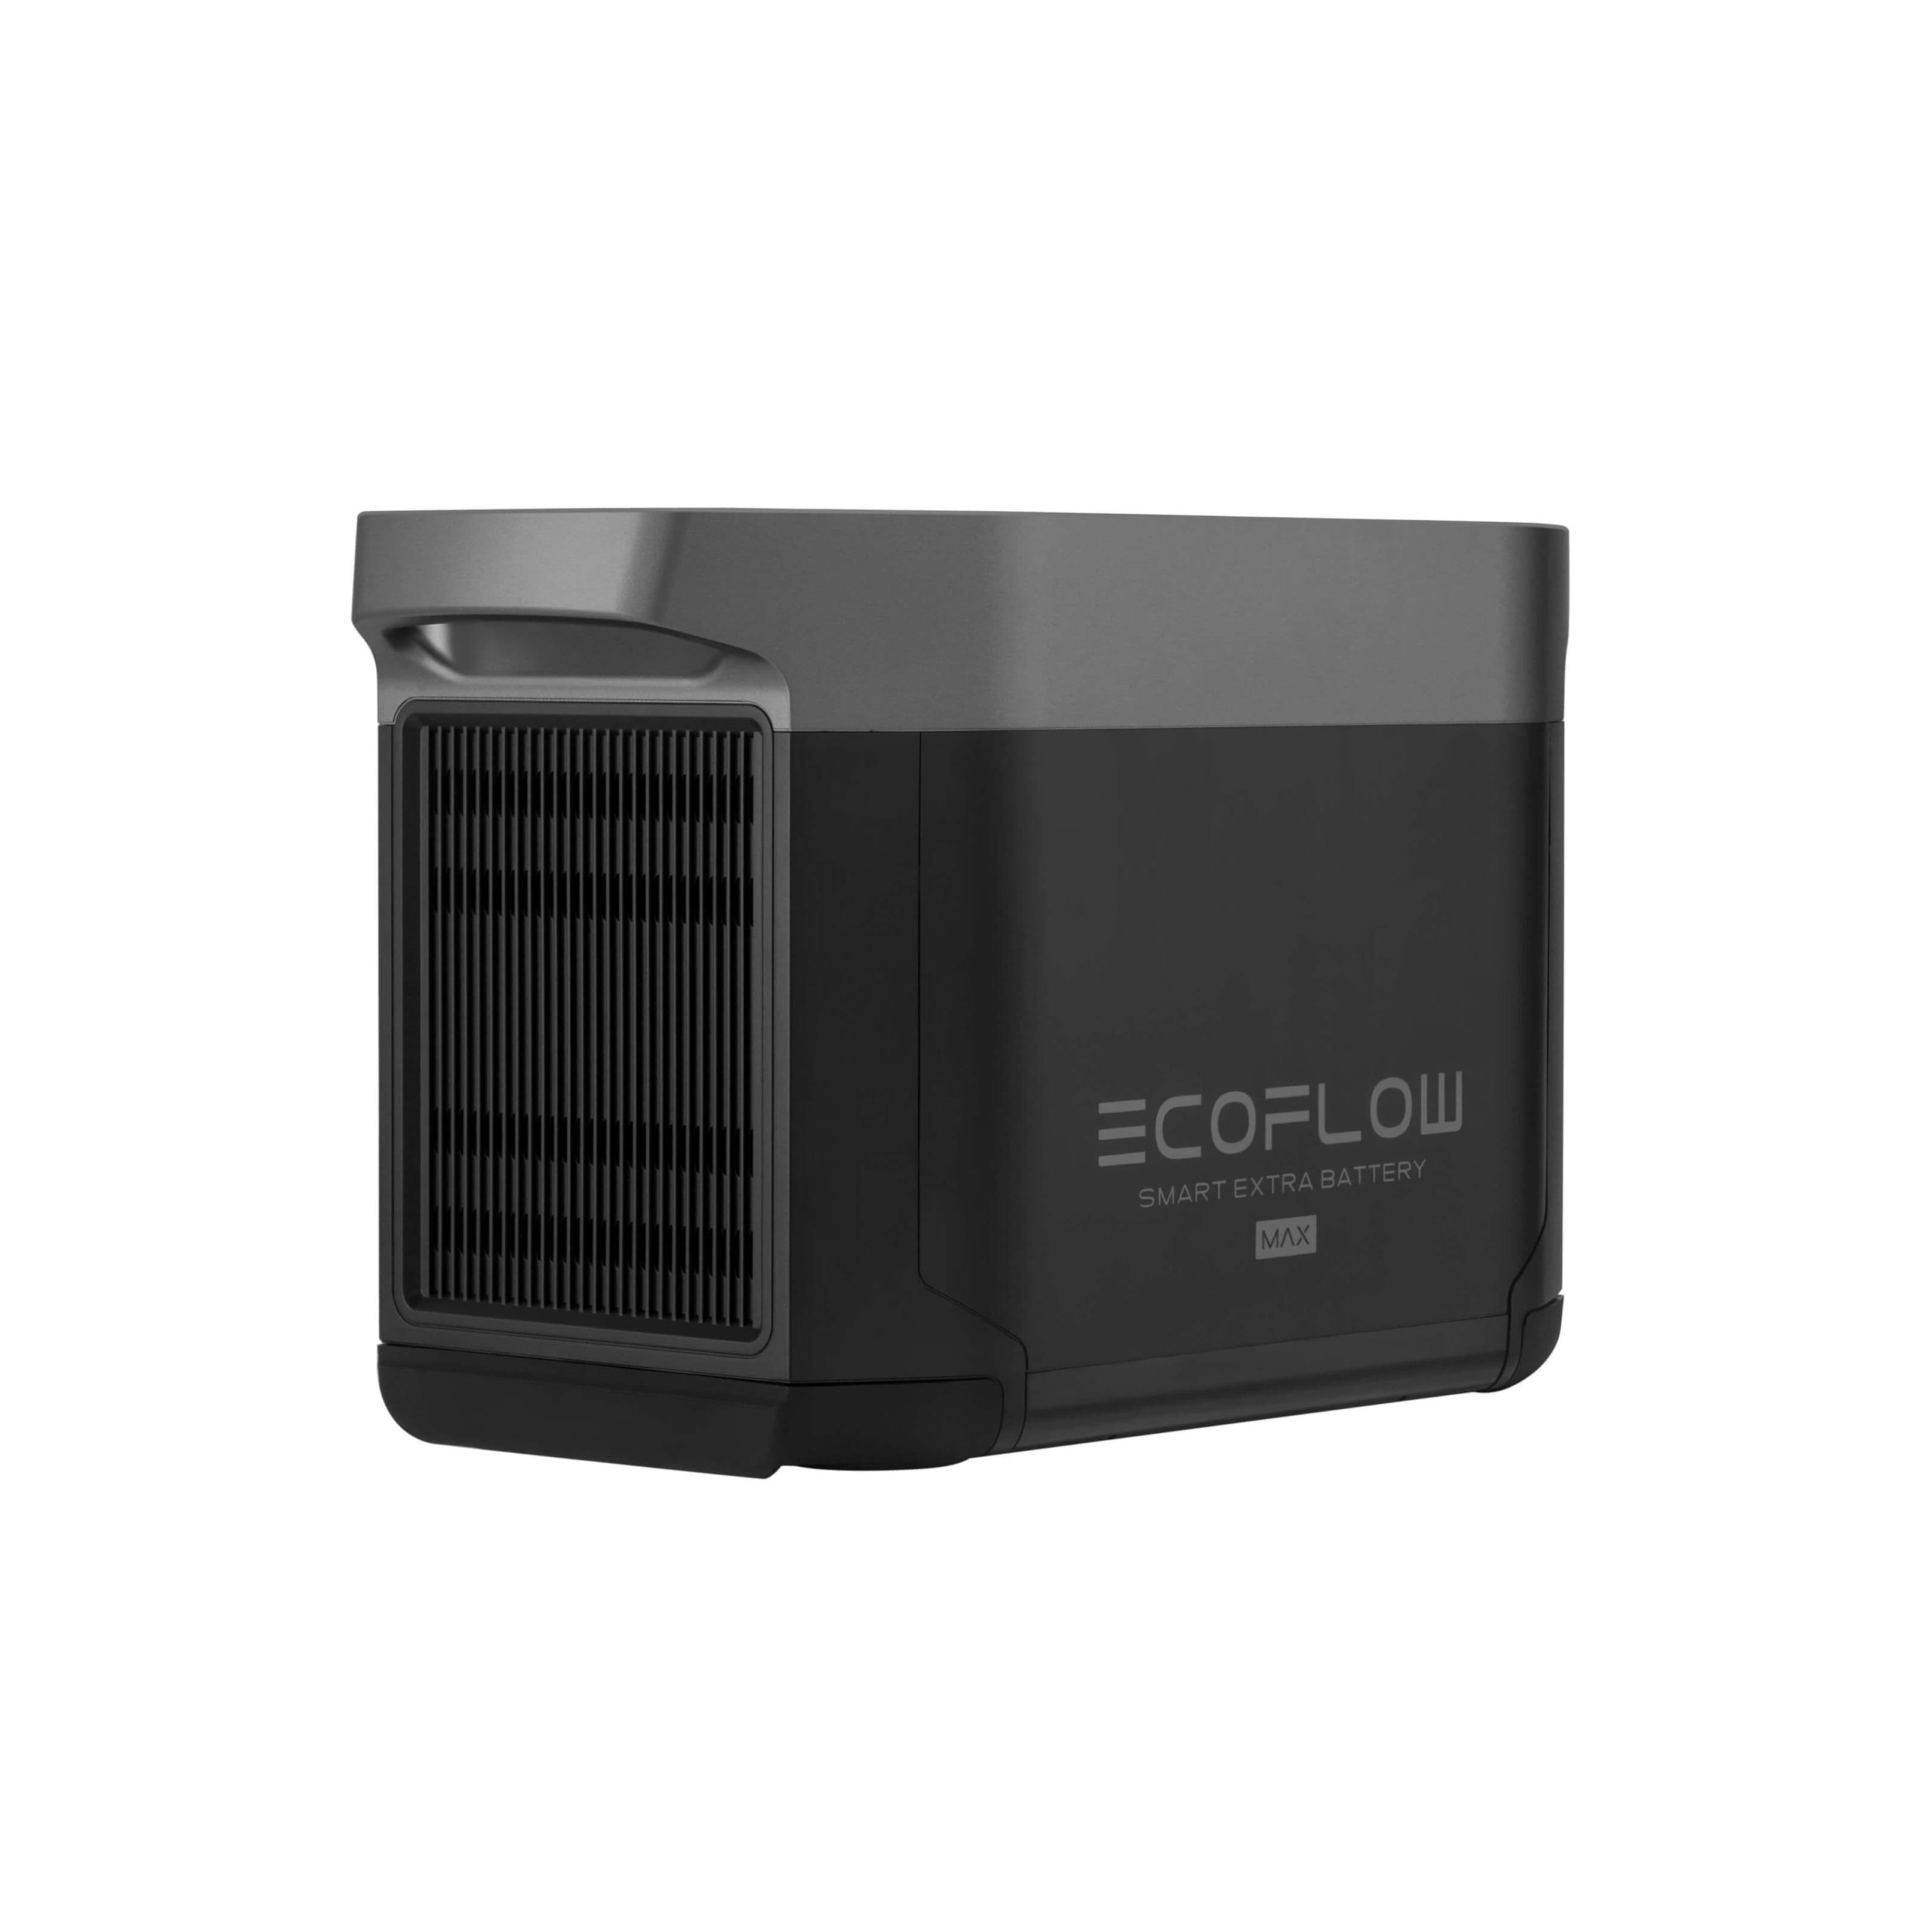 EcoFlow EcoFlow DELTA Max Smart Extra Battery (Refurbished) Accessory